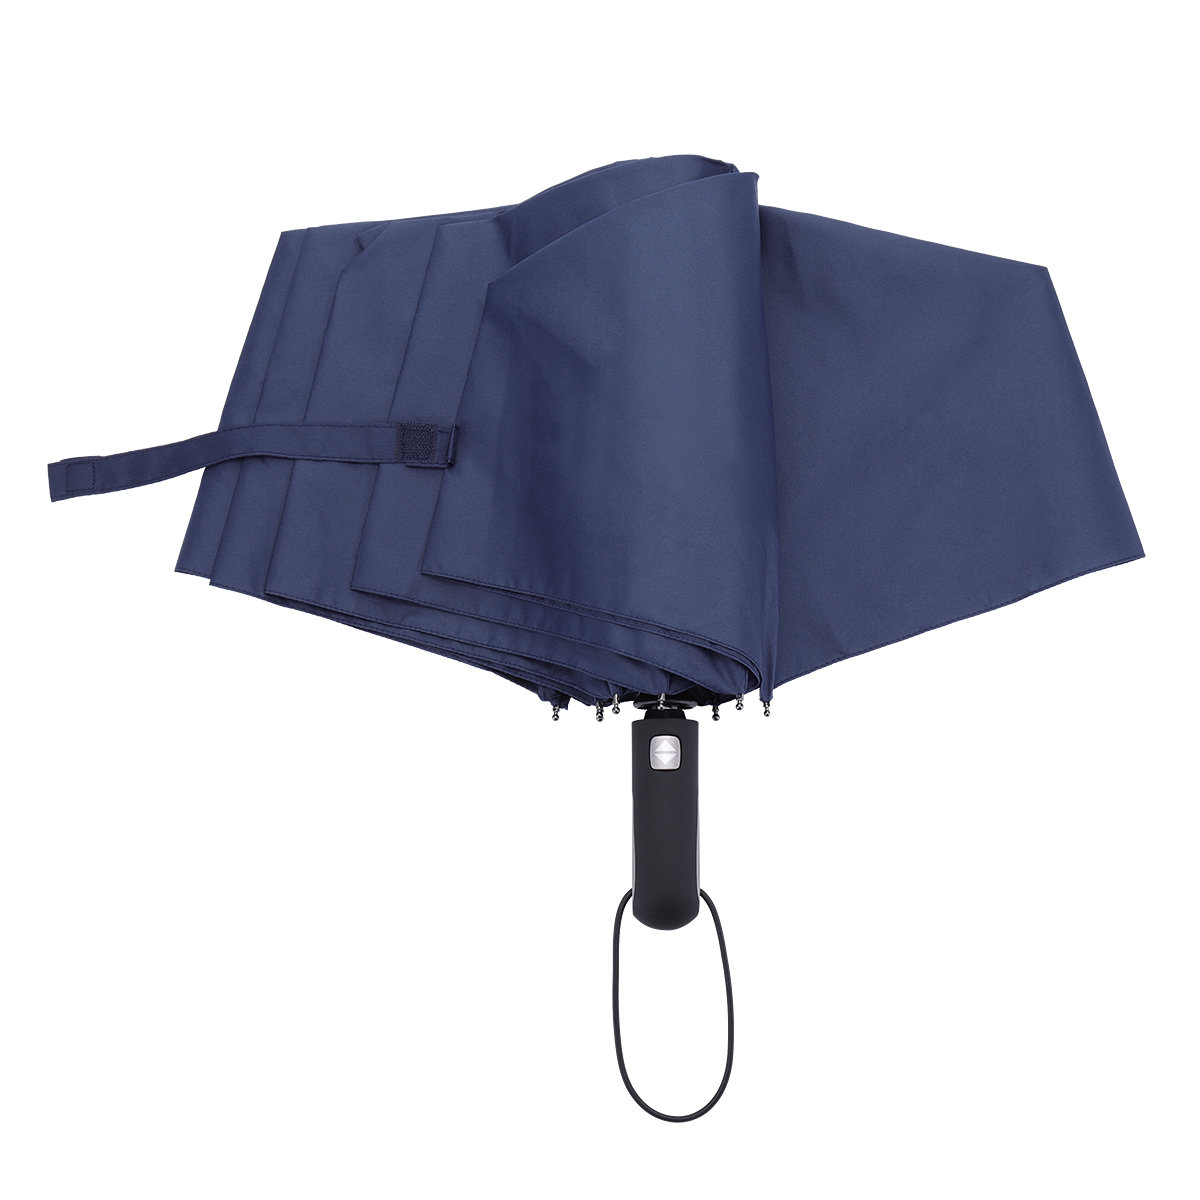 

Large Automatic Open Foldable Portable Golf UmbrellaWindproof Oversized Umbrella, Blue;black